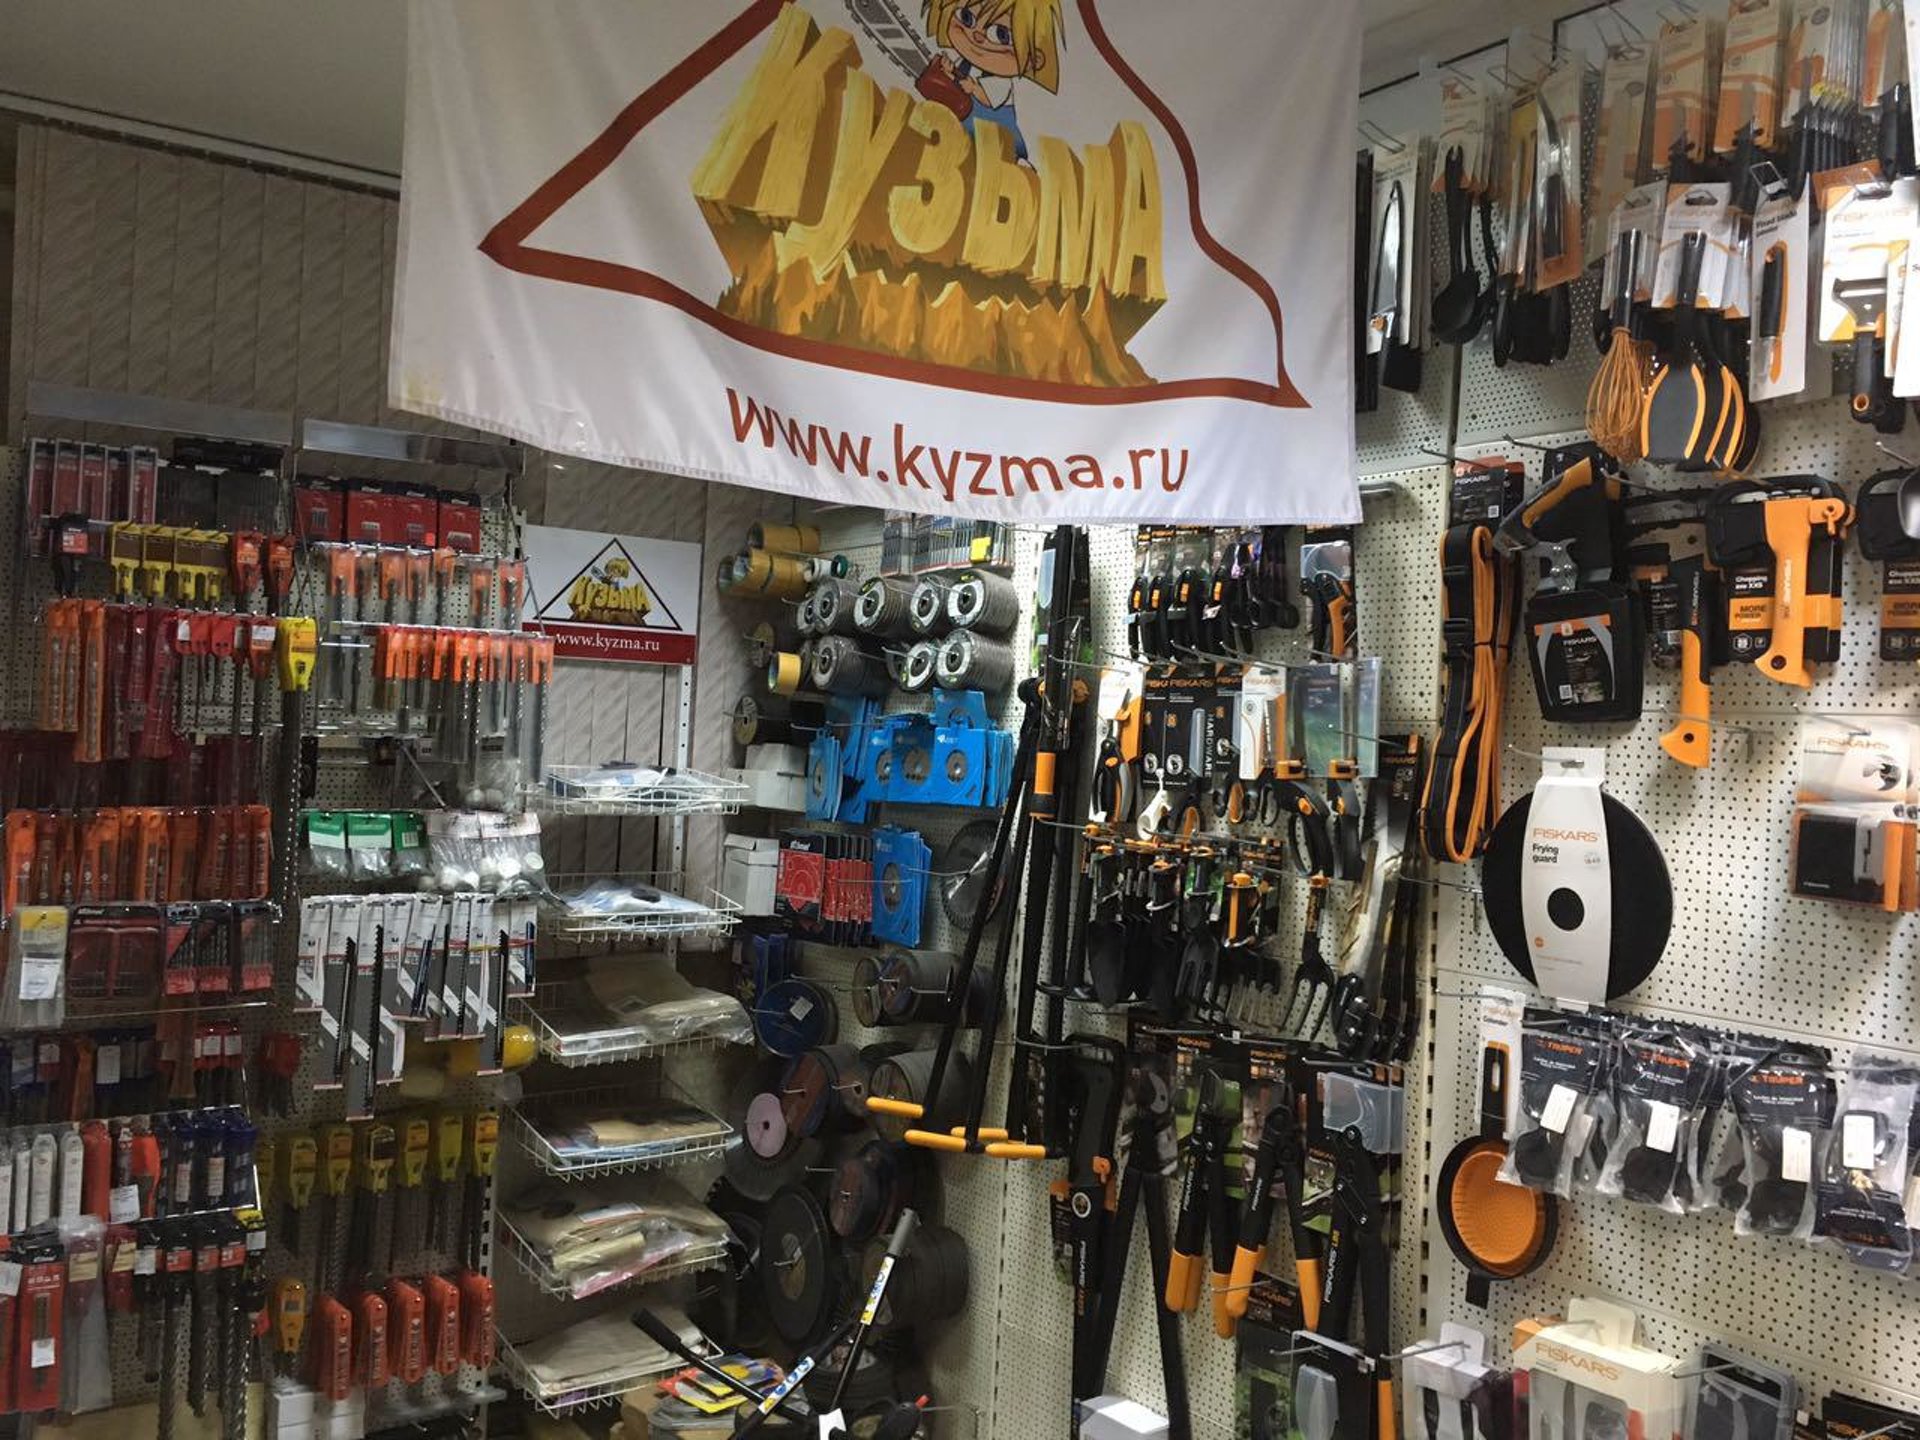 Kyzma Ru Интернет Магазин Запчасти